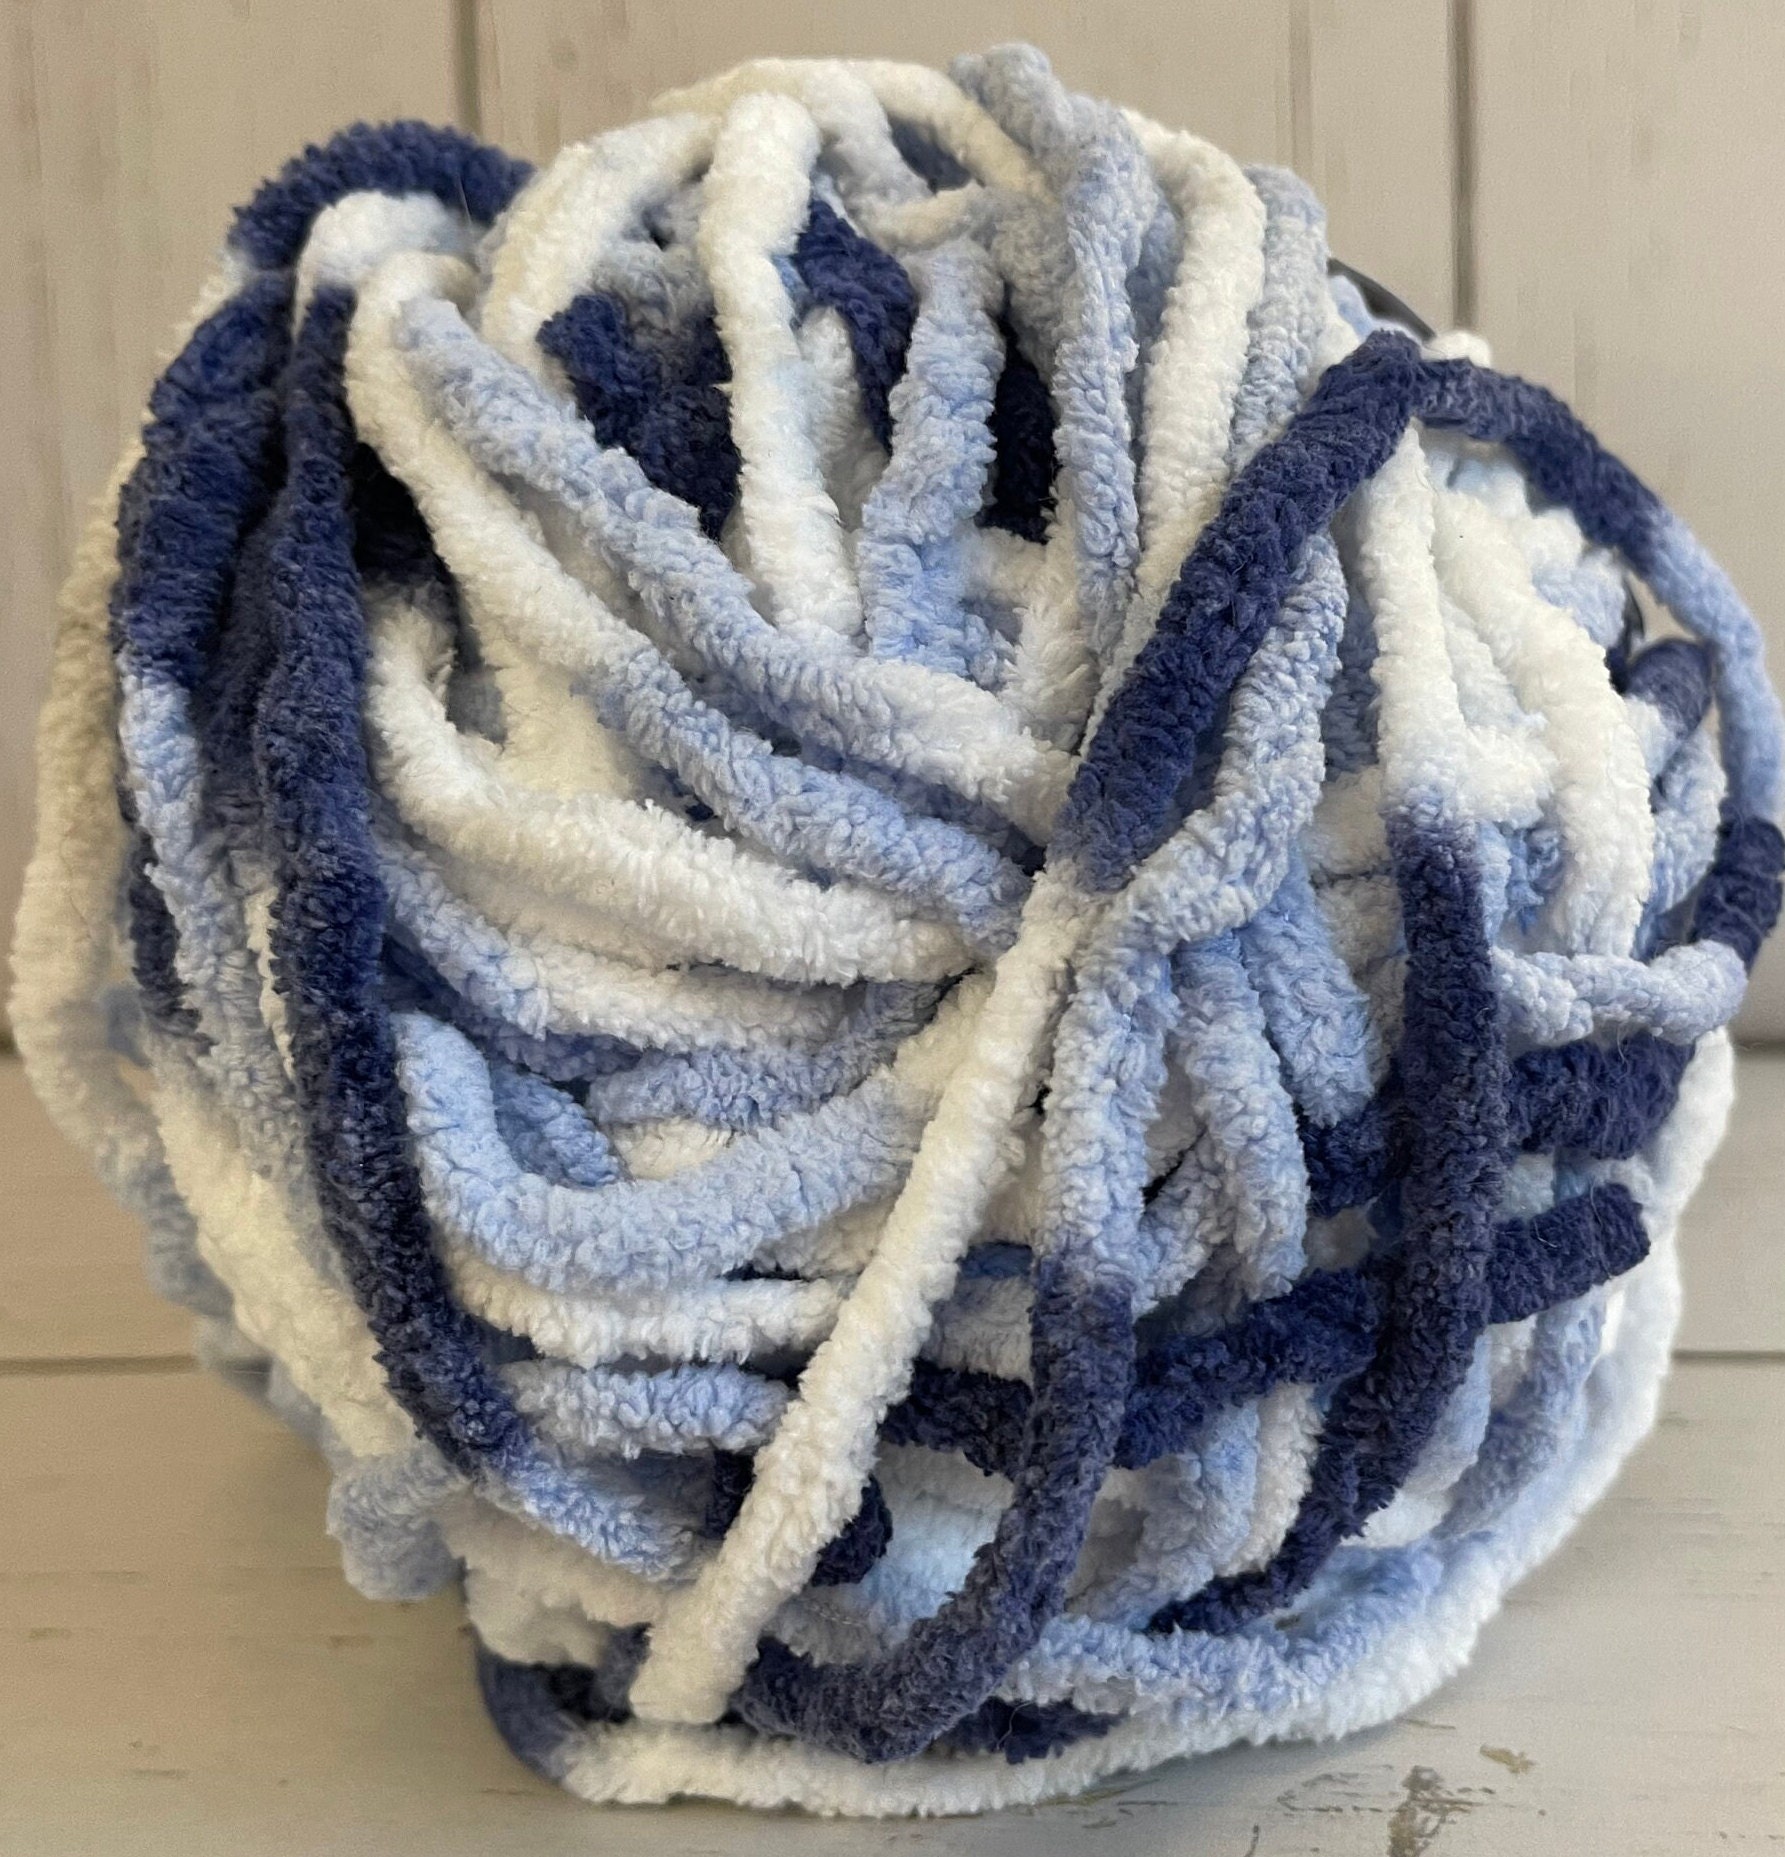 Bernat Baby Blanket Big Ball Yarn - Lovely Blue